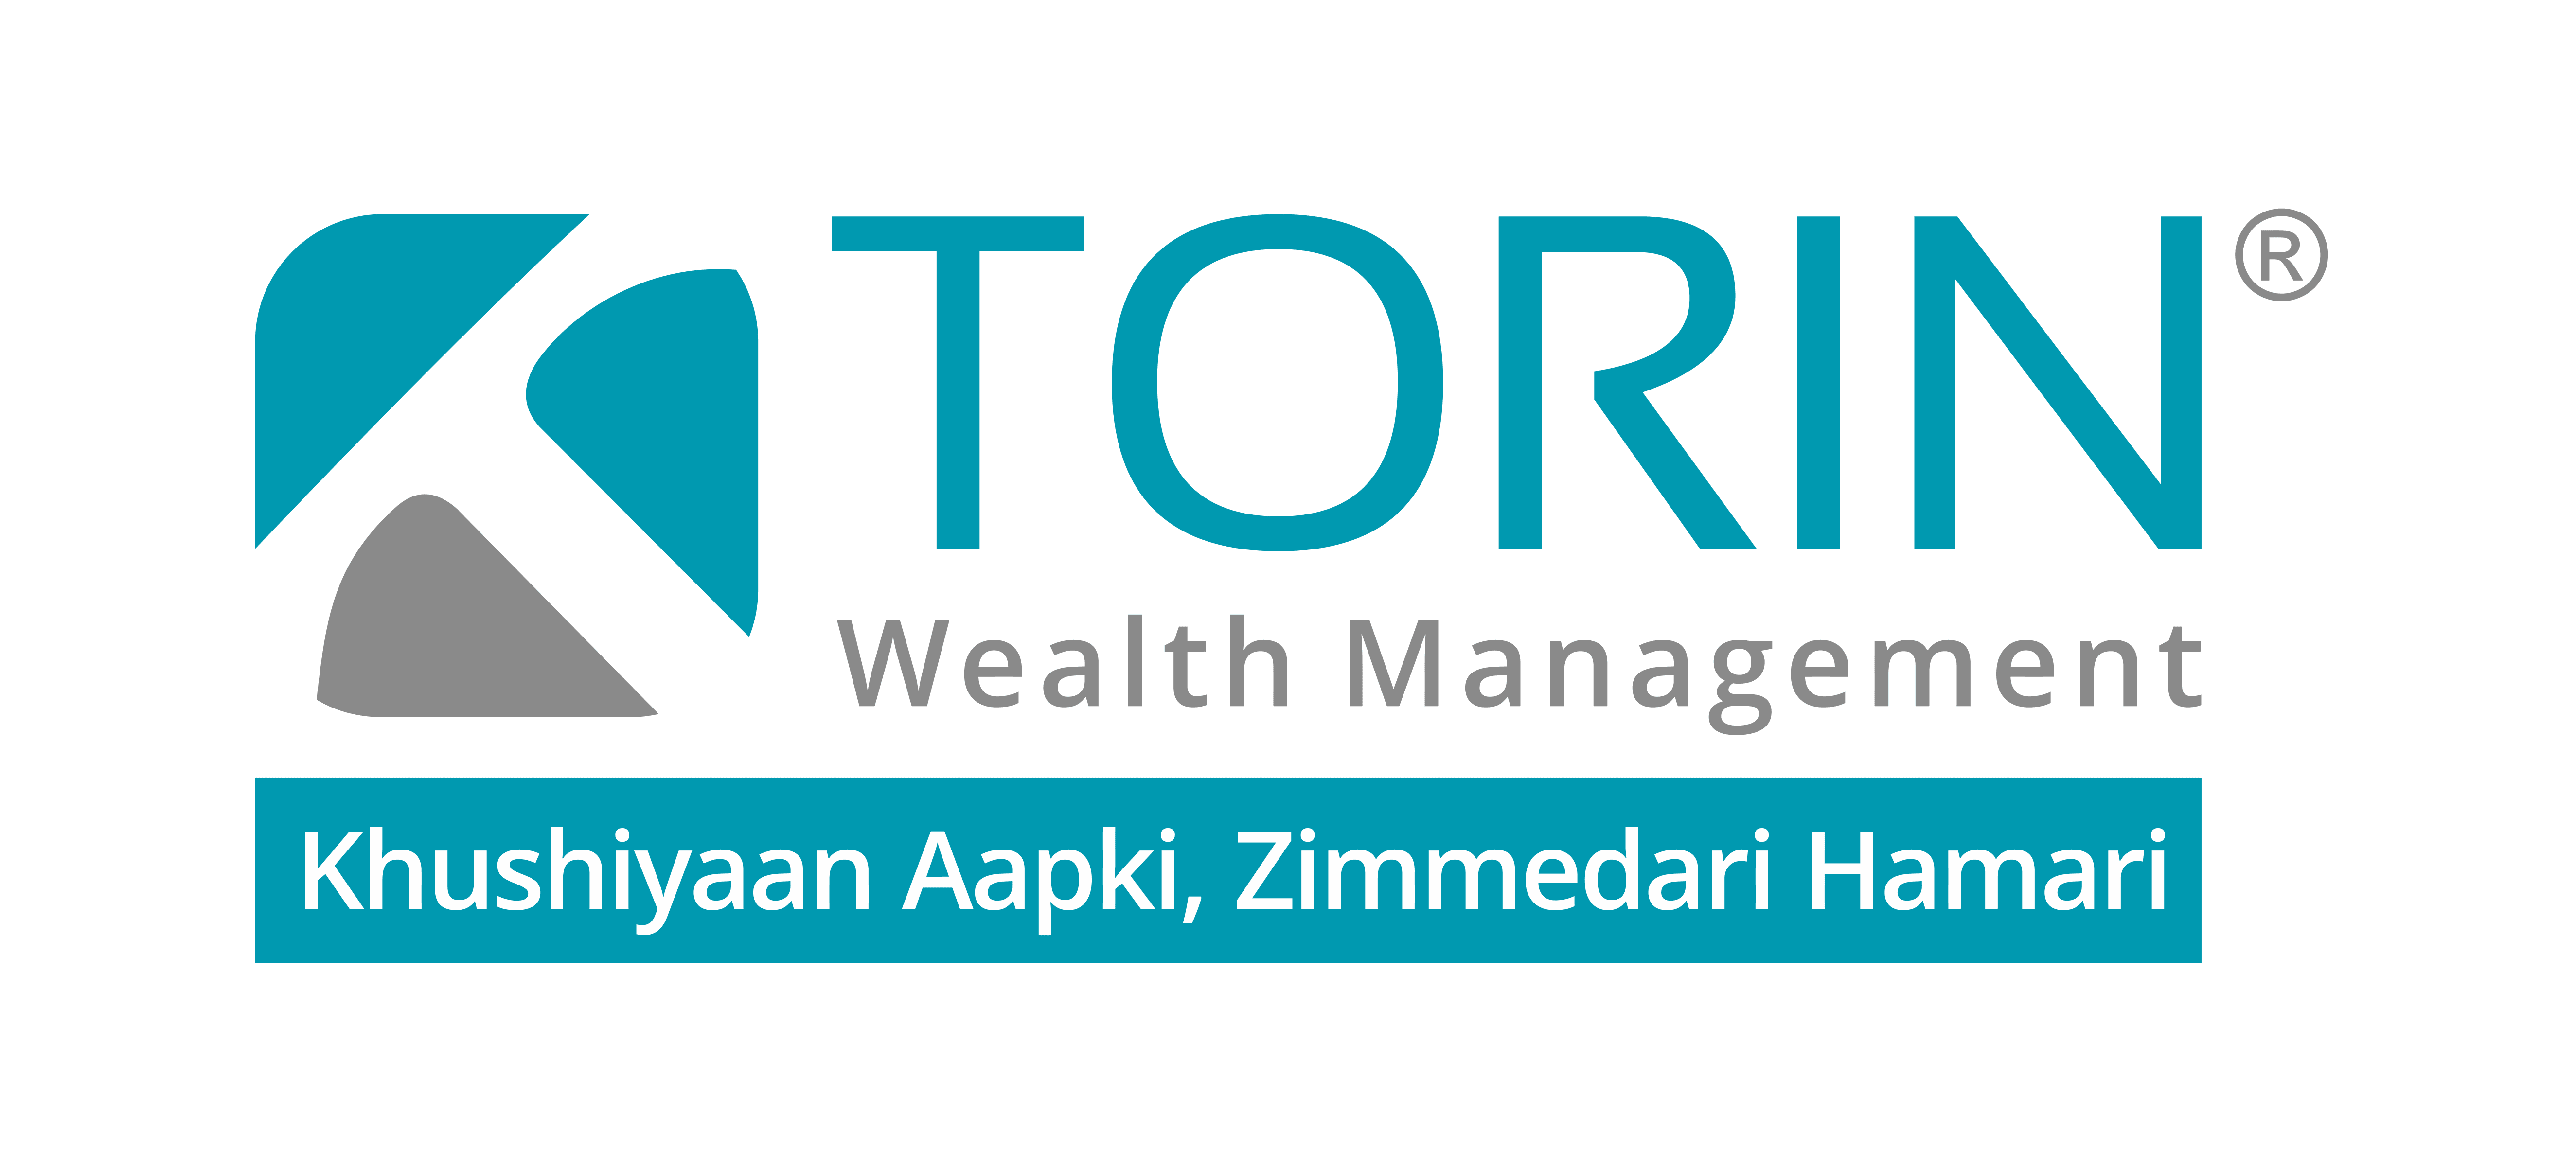 Torrin Wealth